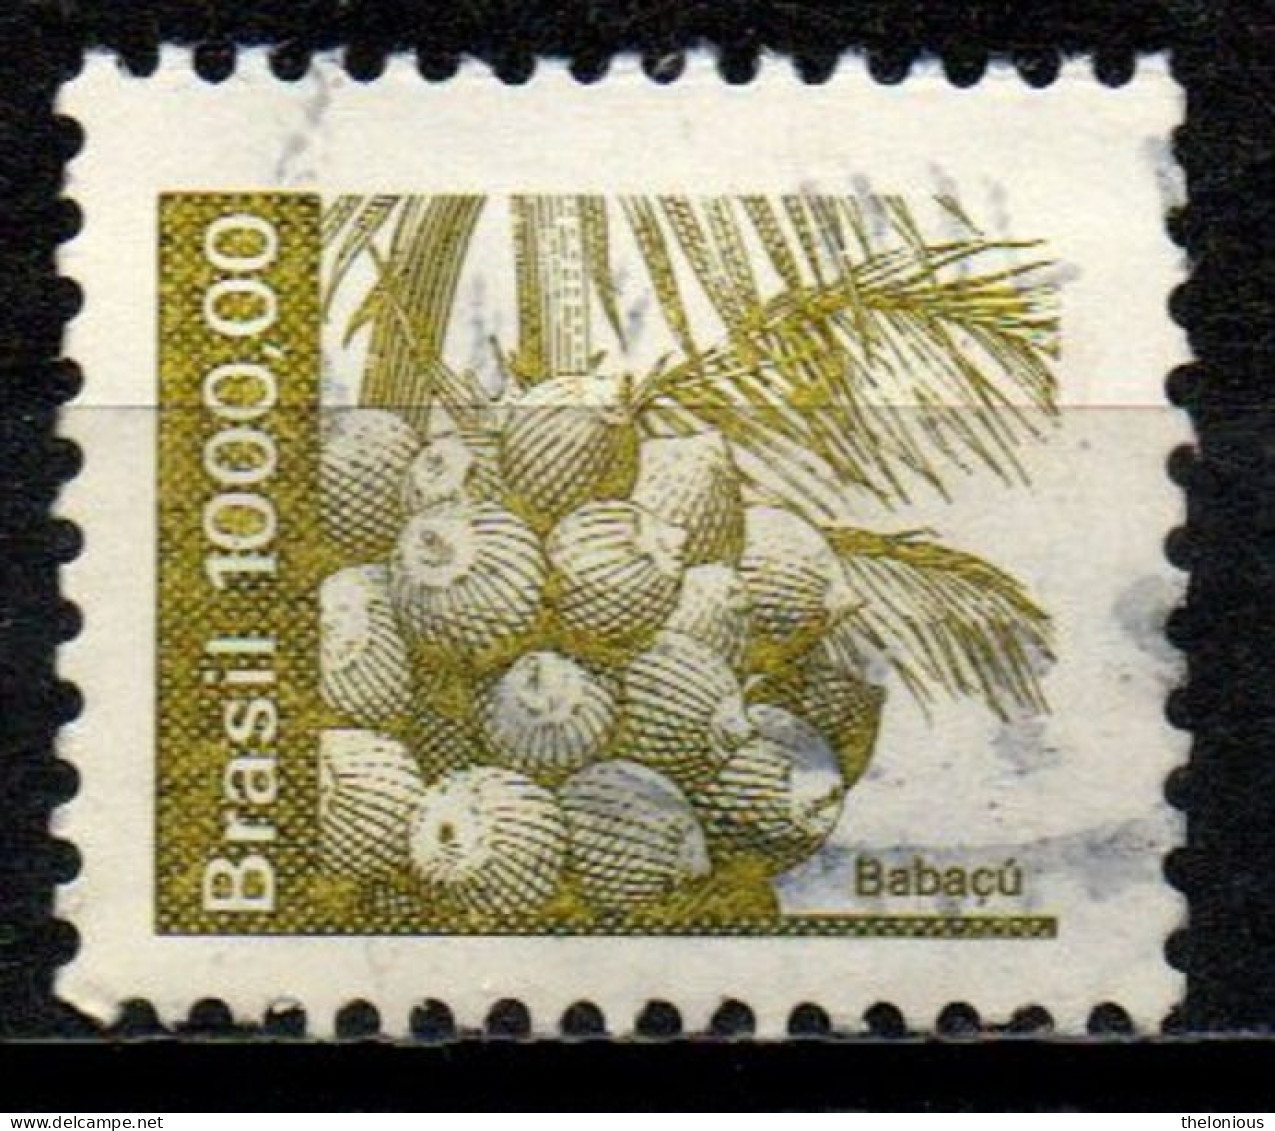 # Brasile 1984: Babacú - Babassu Palm - Frutta E Bacche | Piante (Flora) - Used Stamps